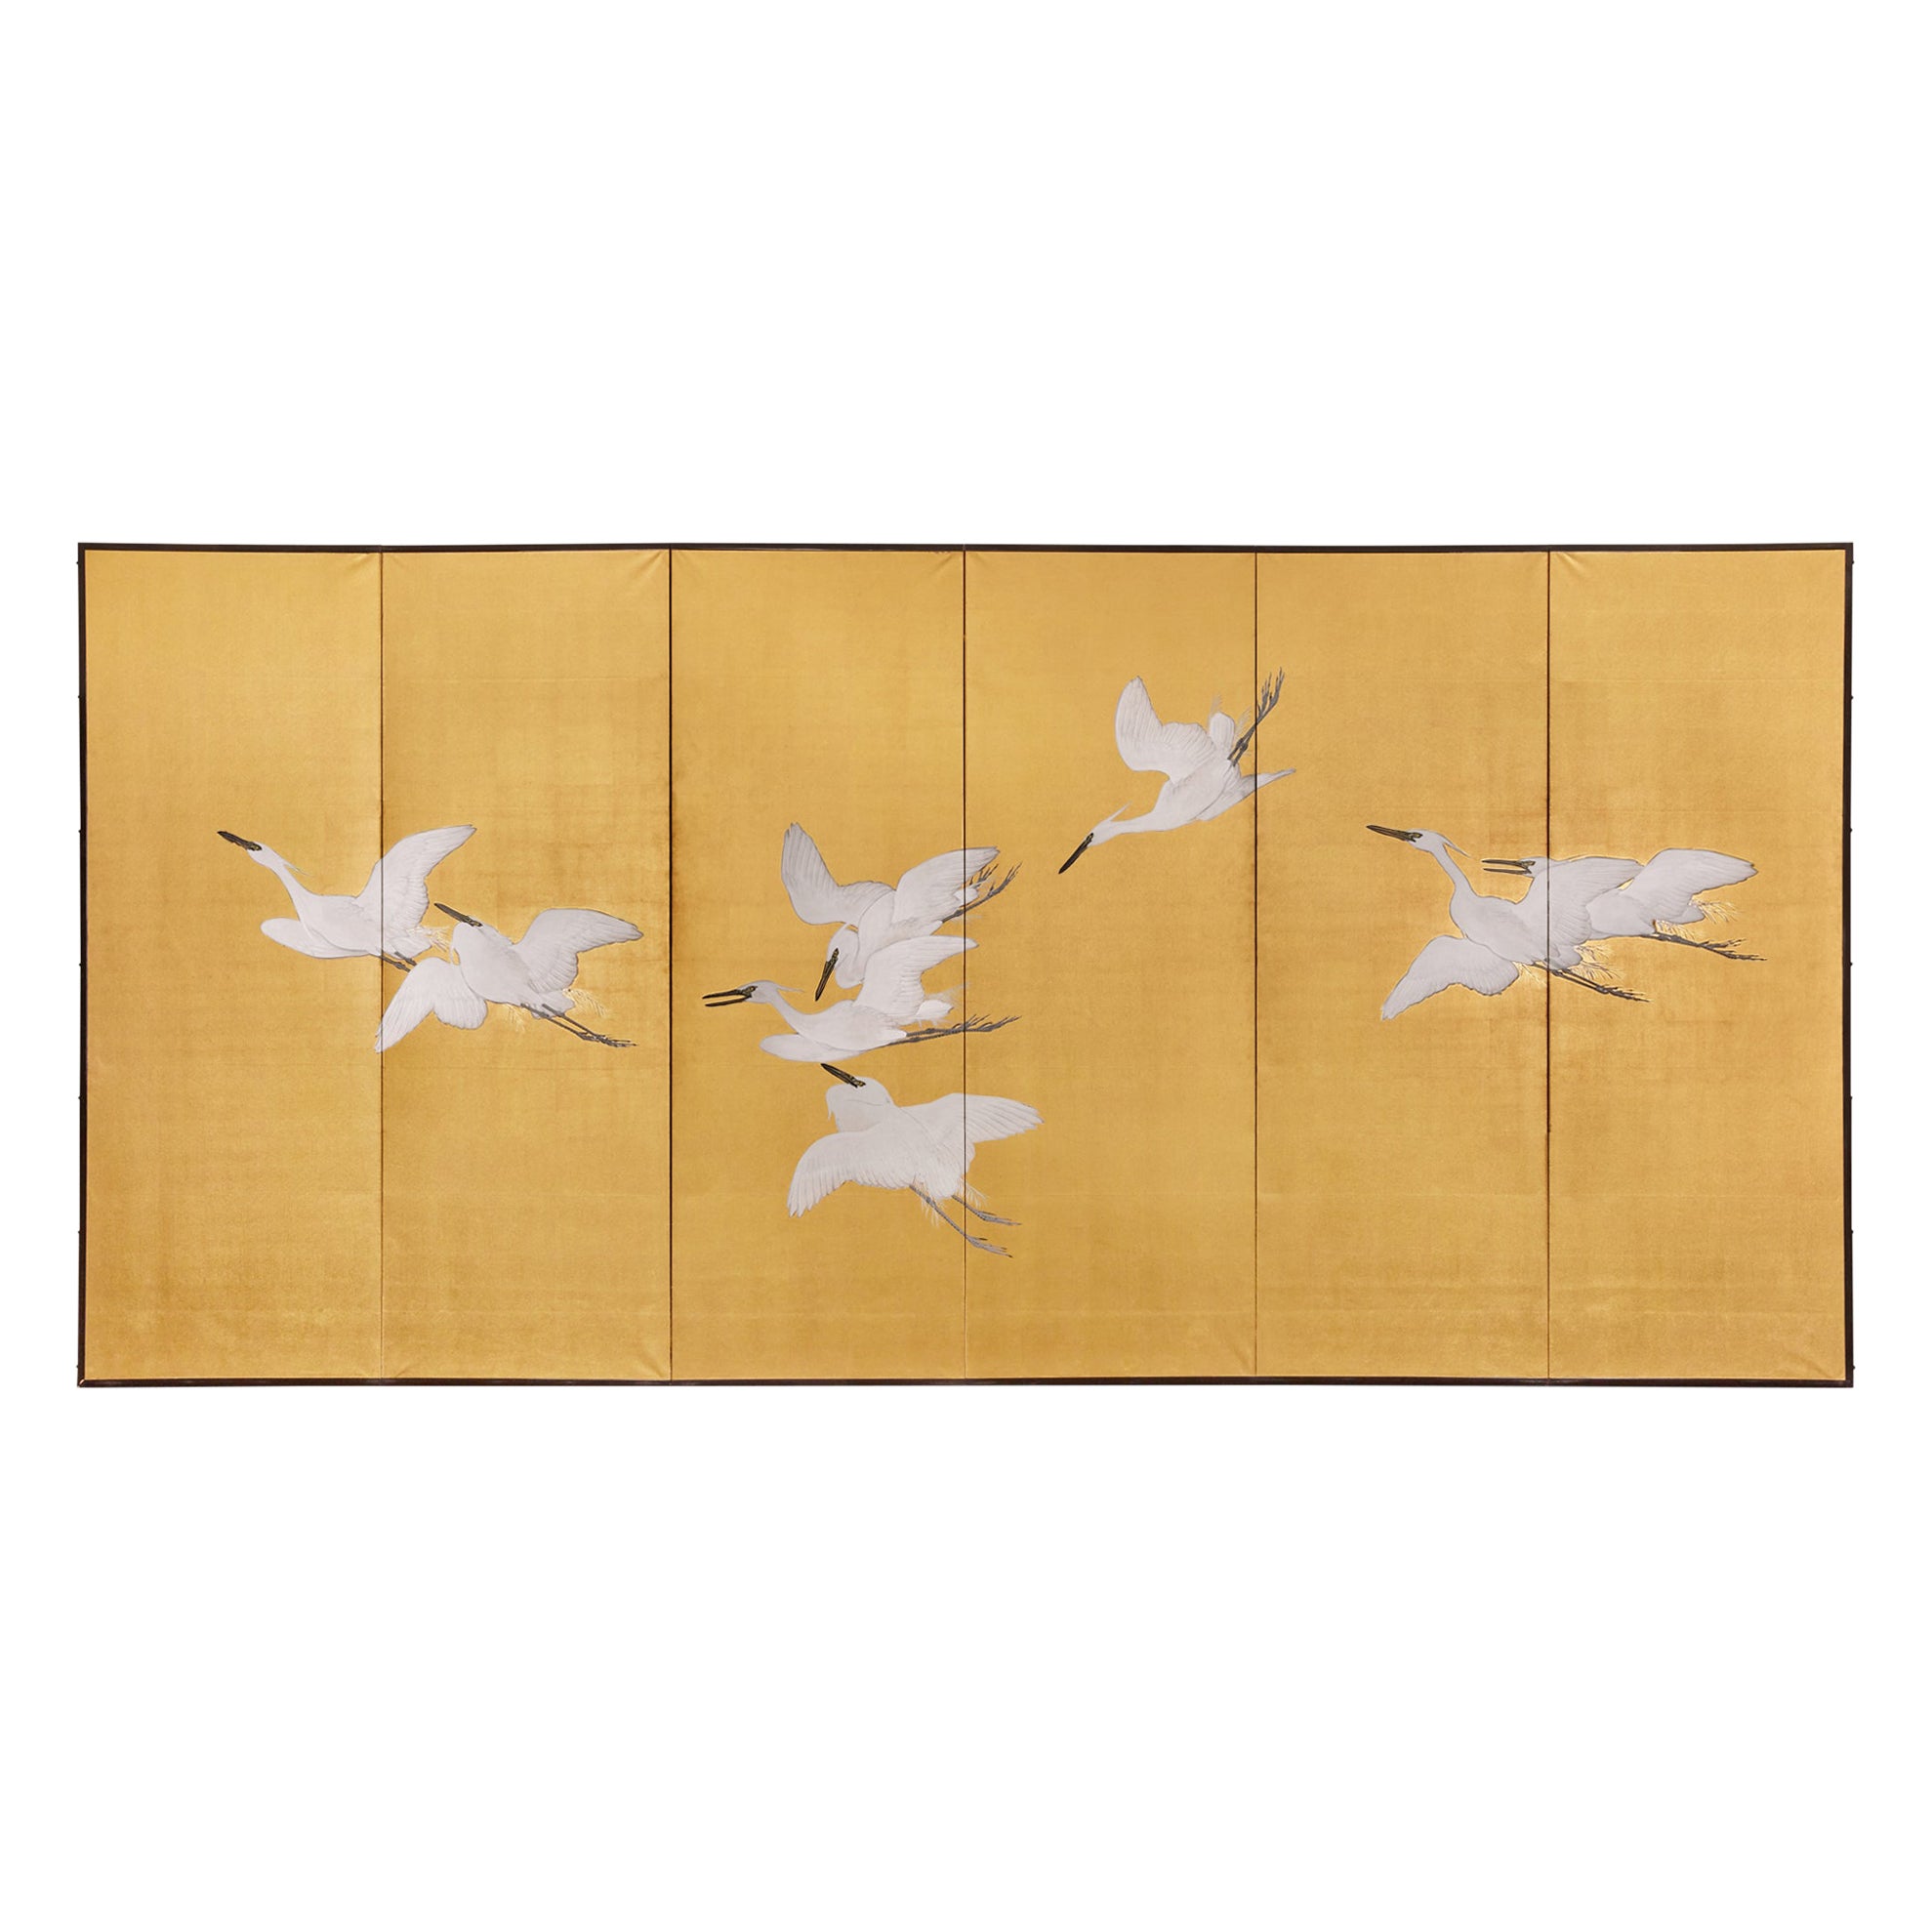 Japanese Six Panel Screen: Egrets in Flight